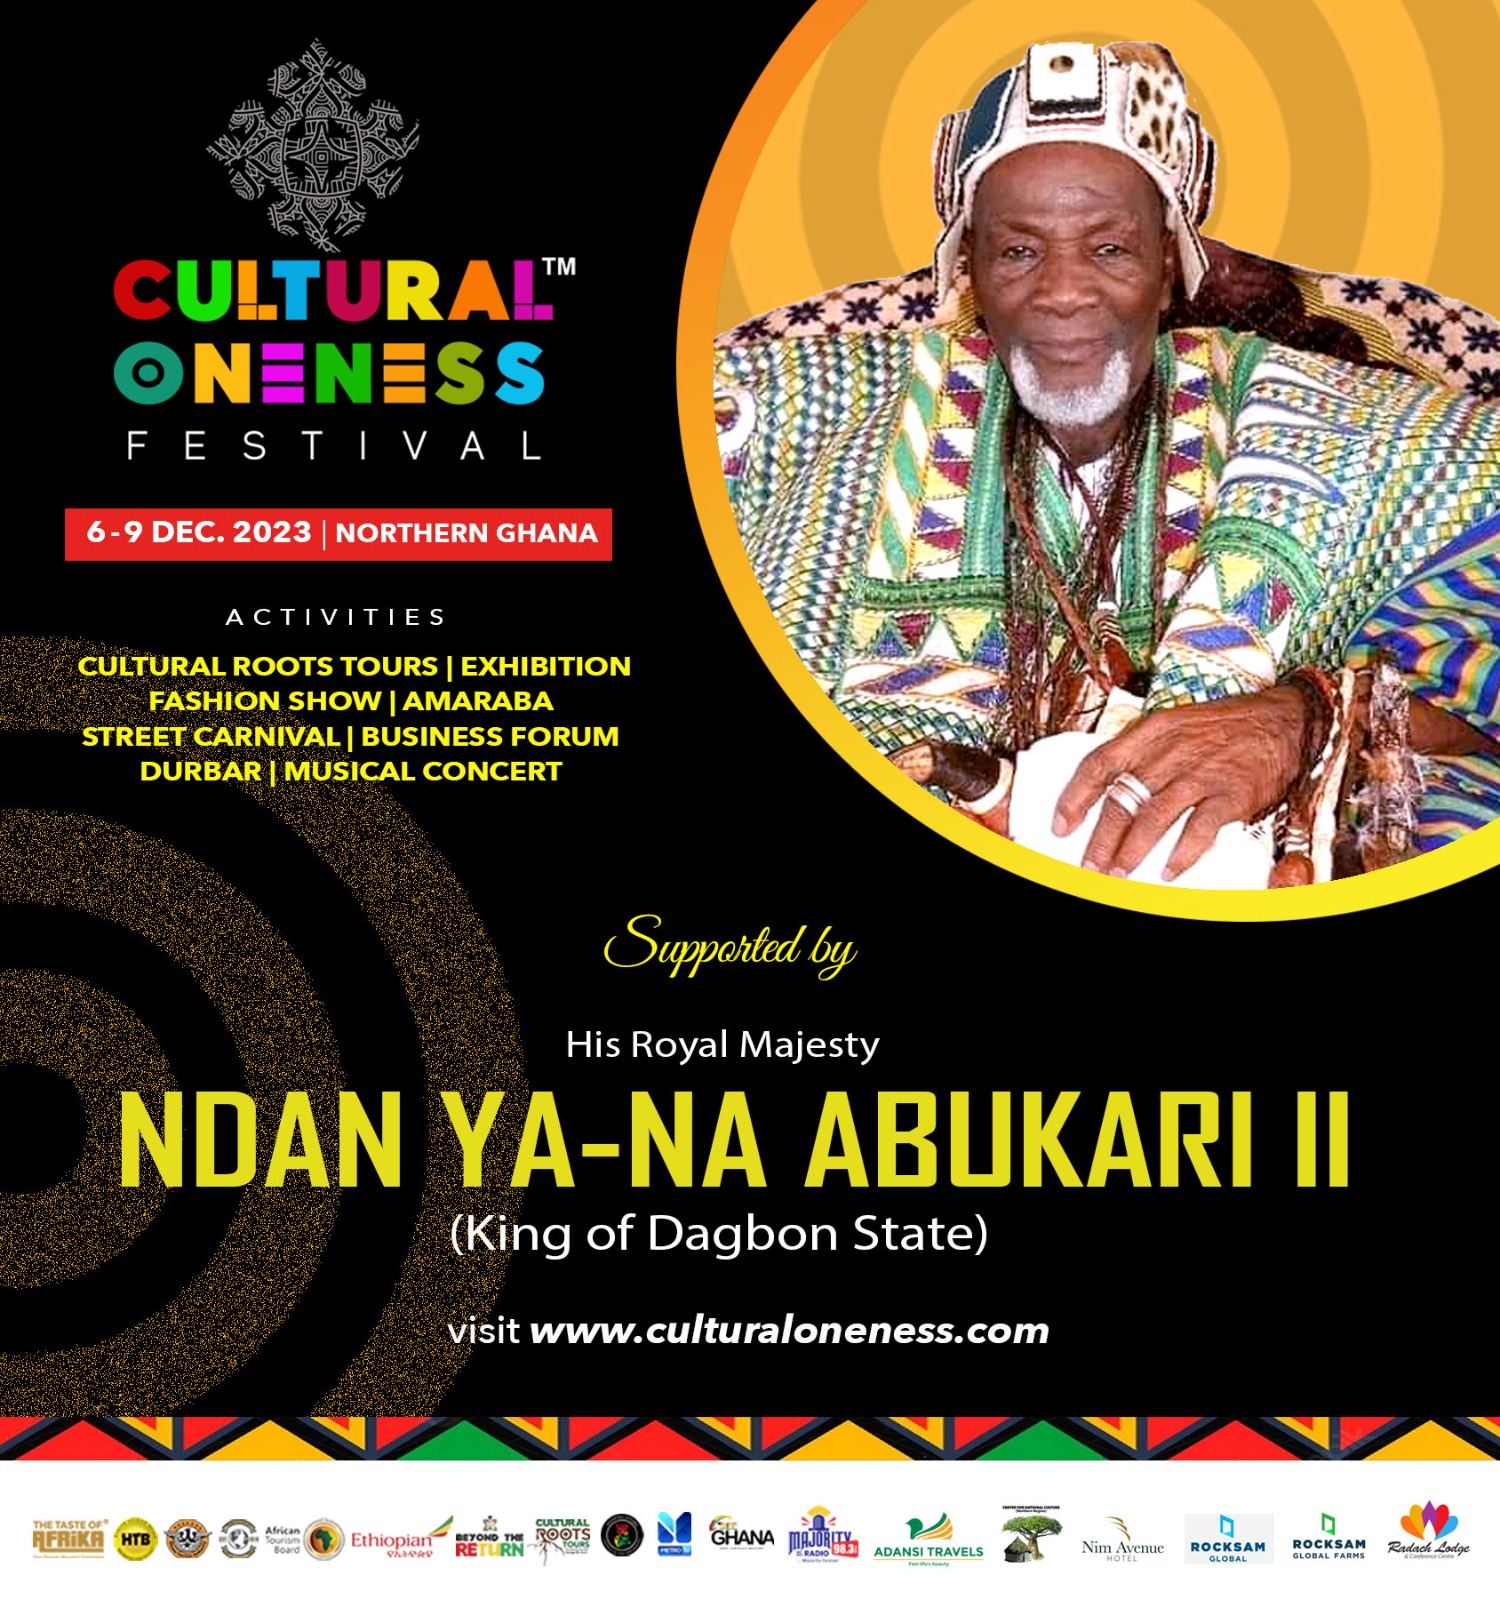 Ya-Naa endorses Cultural Oneness Festival